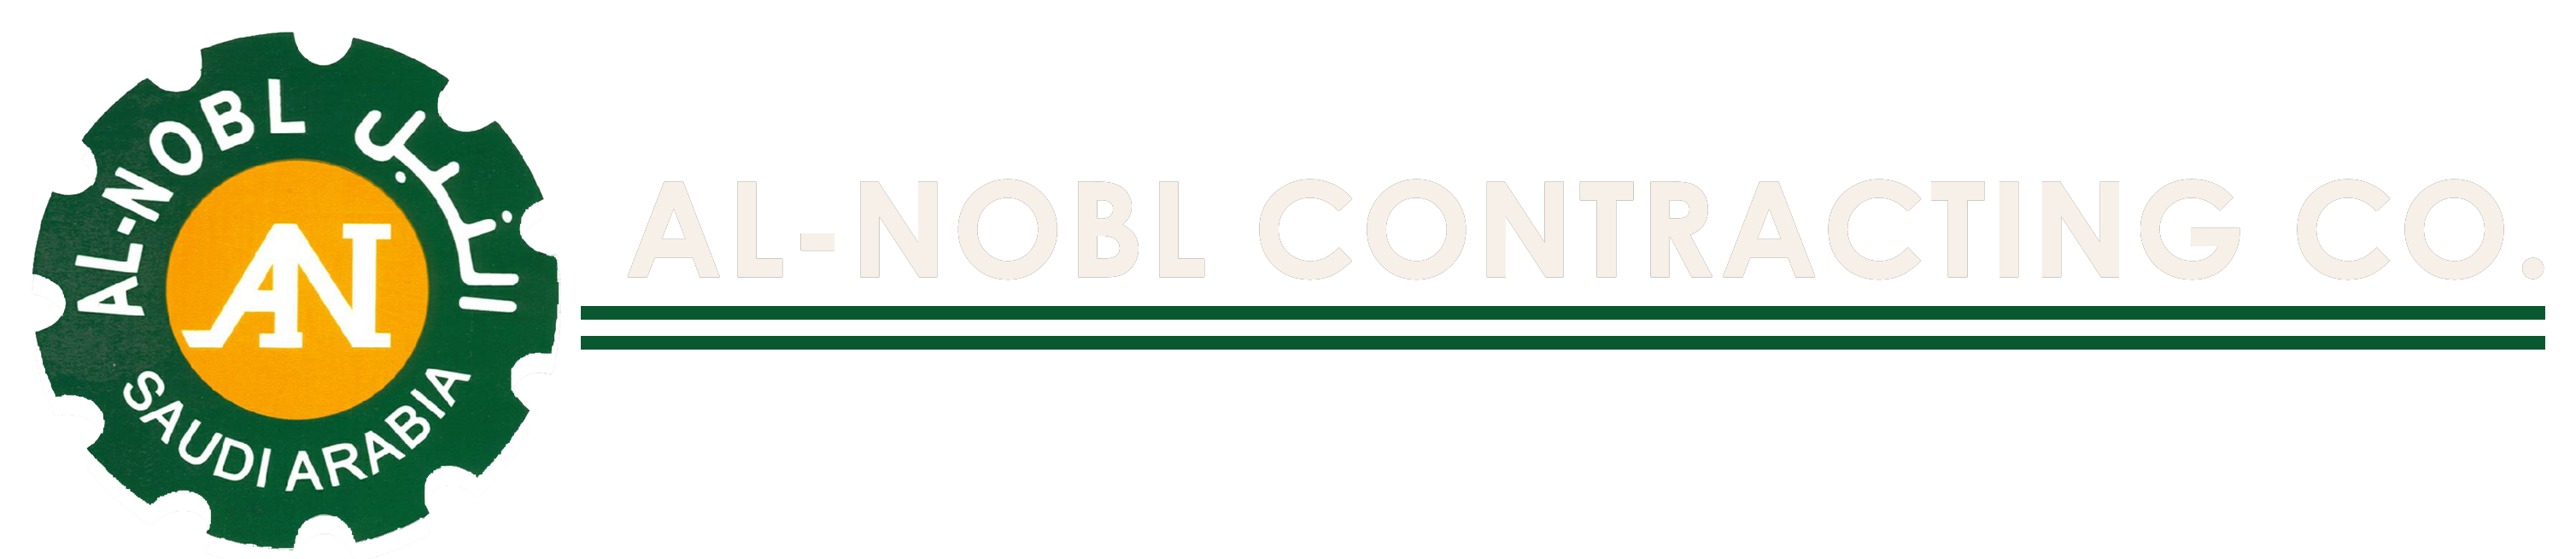 Al-Nobl Contracting Co.